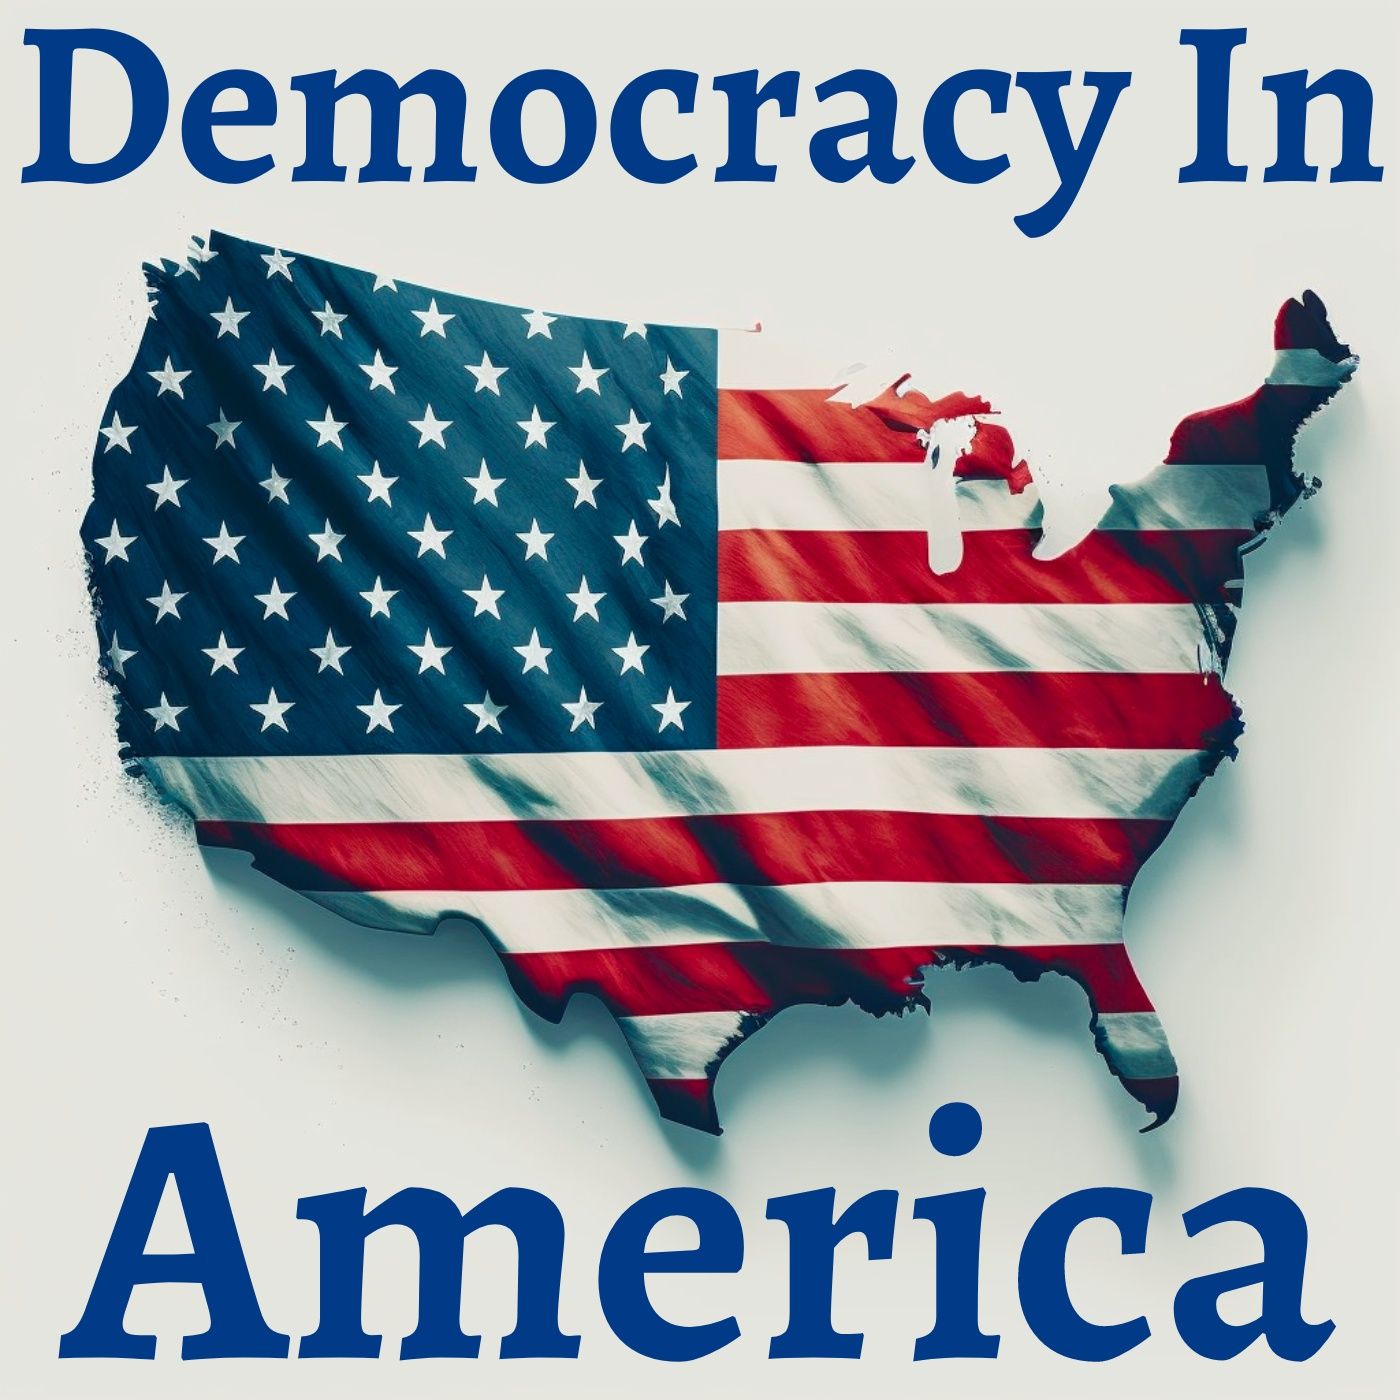 Democracy in America - Trailer